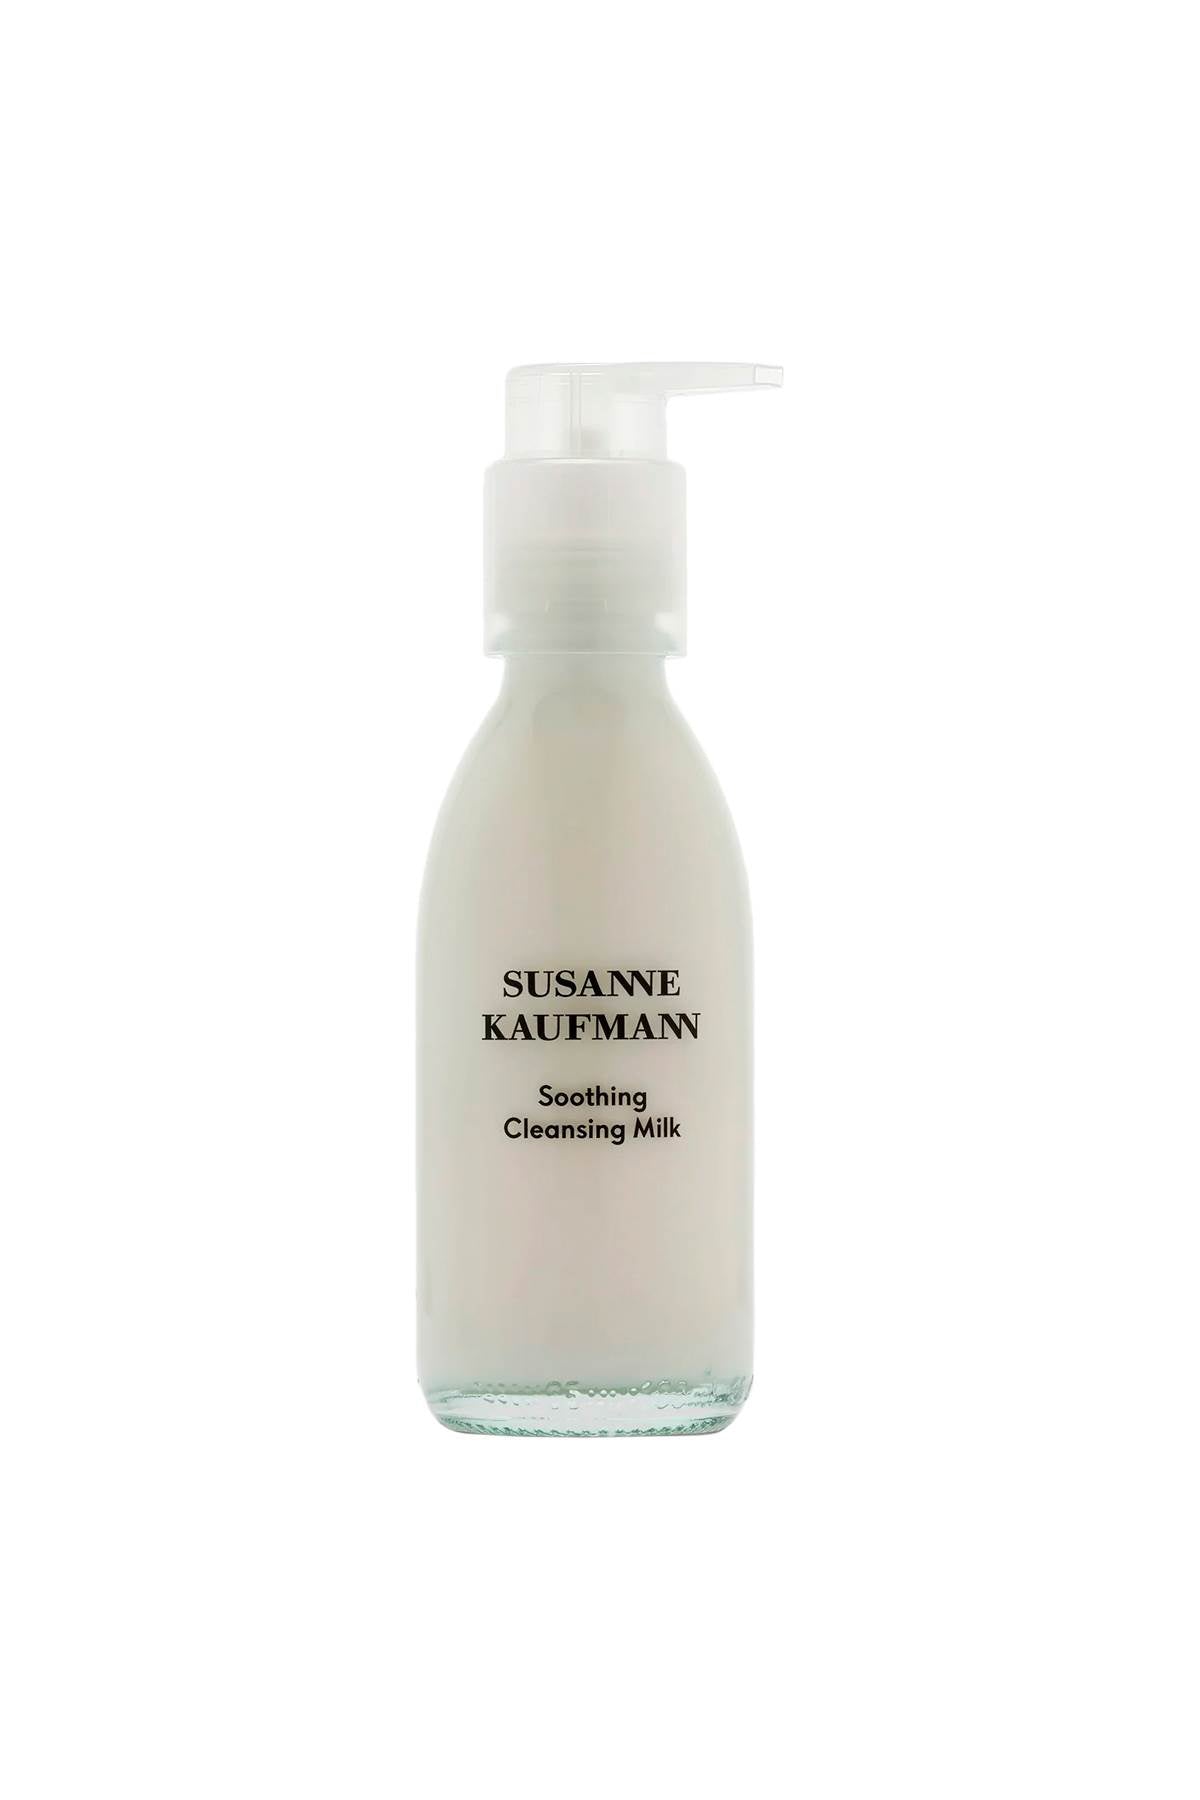 Susanne kaufmann soothing cleansing milk - 100 ml-0